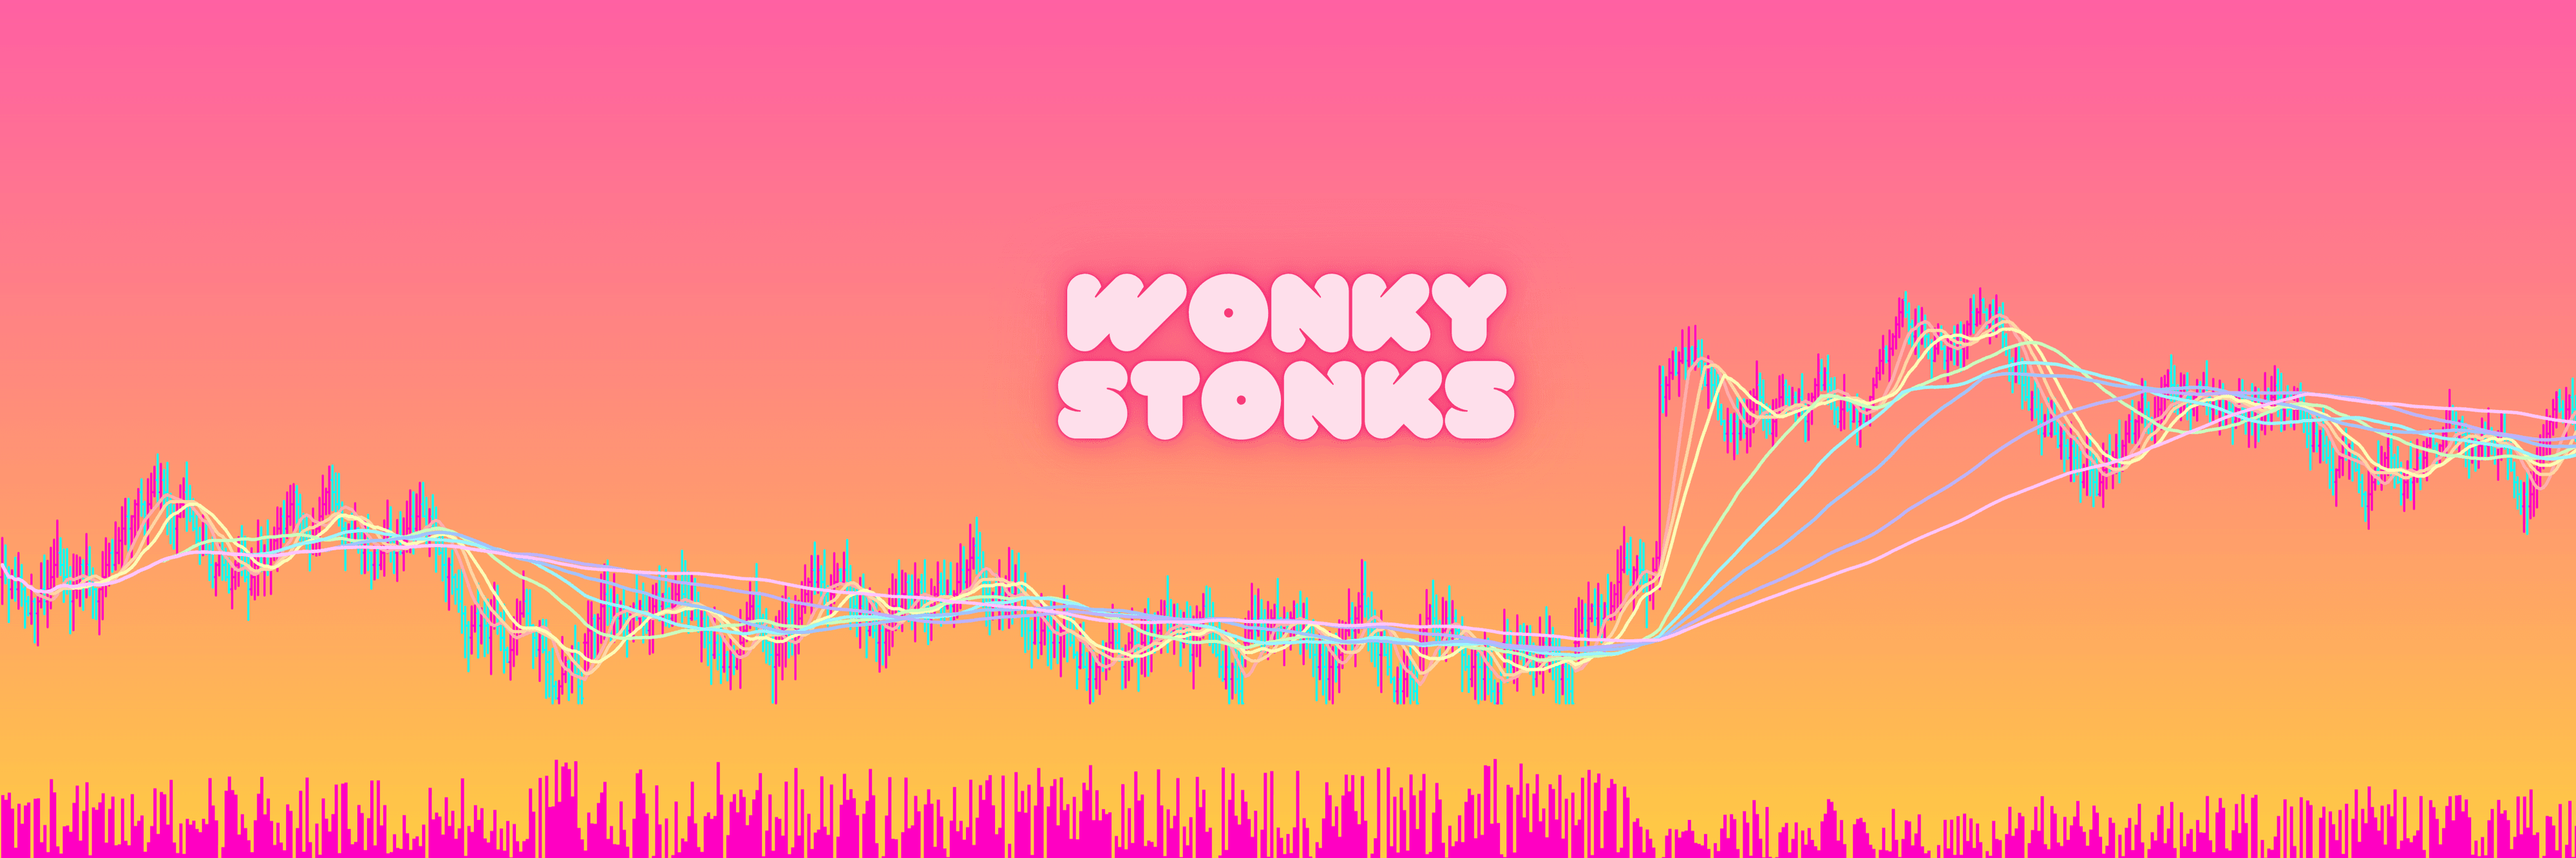 Wonky Stonks